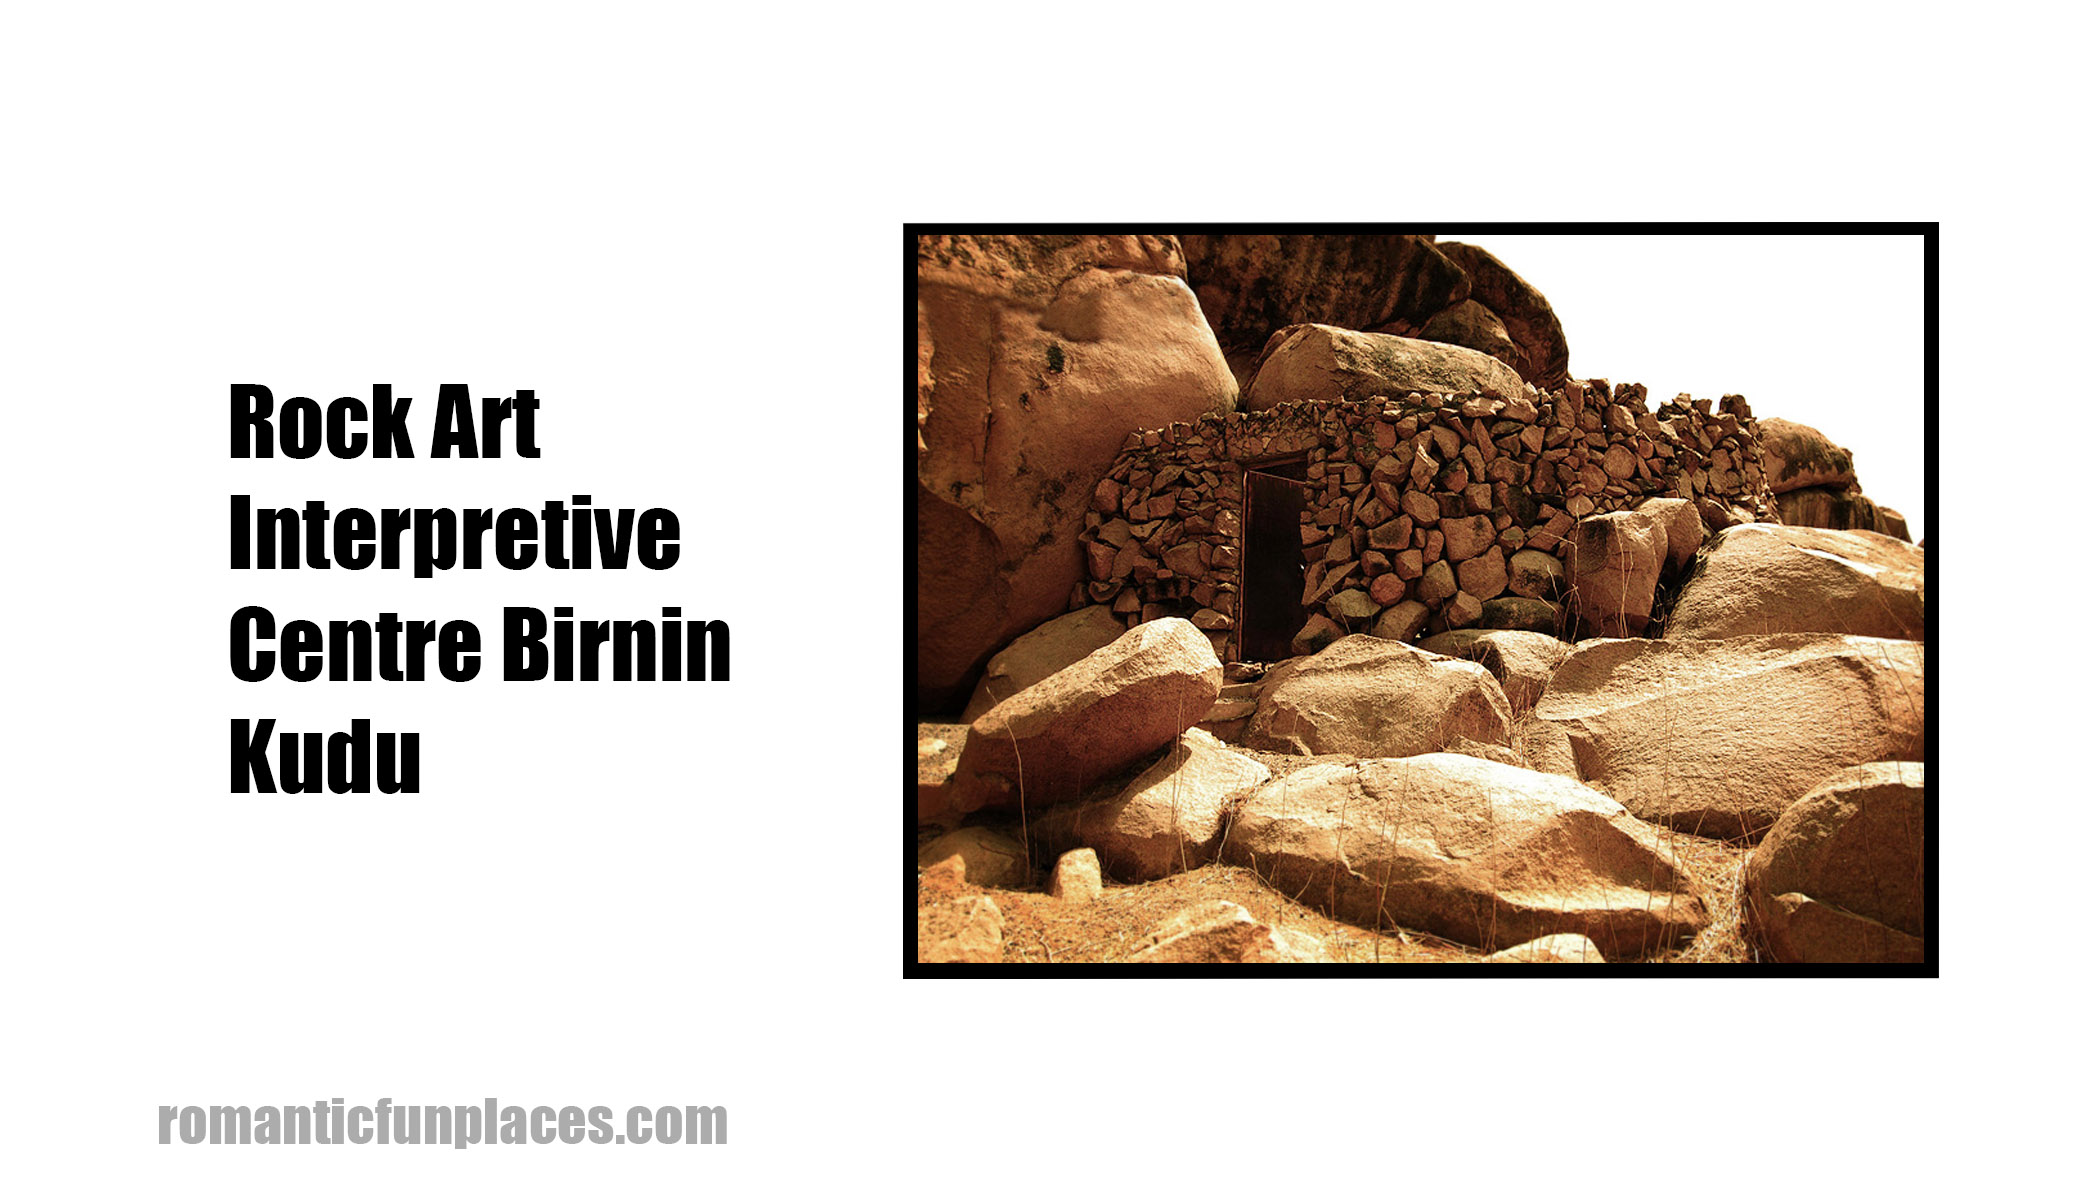 Rock Art Interpretive Centre Birnin Kudu